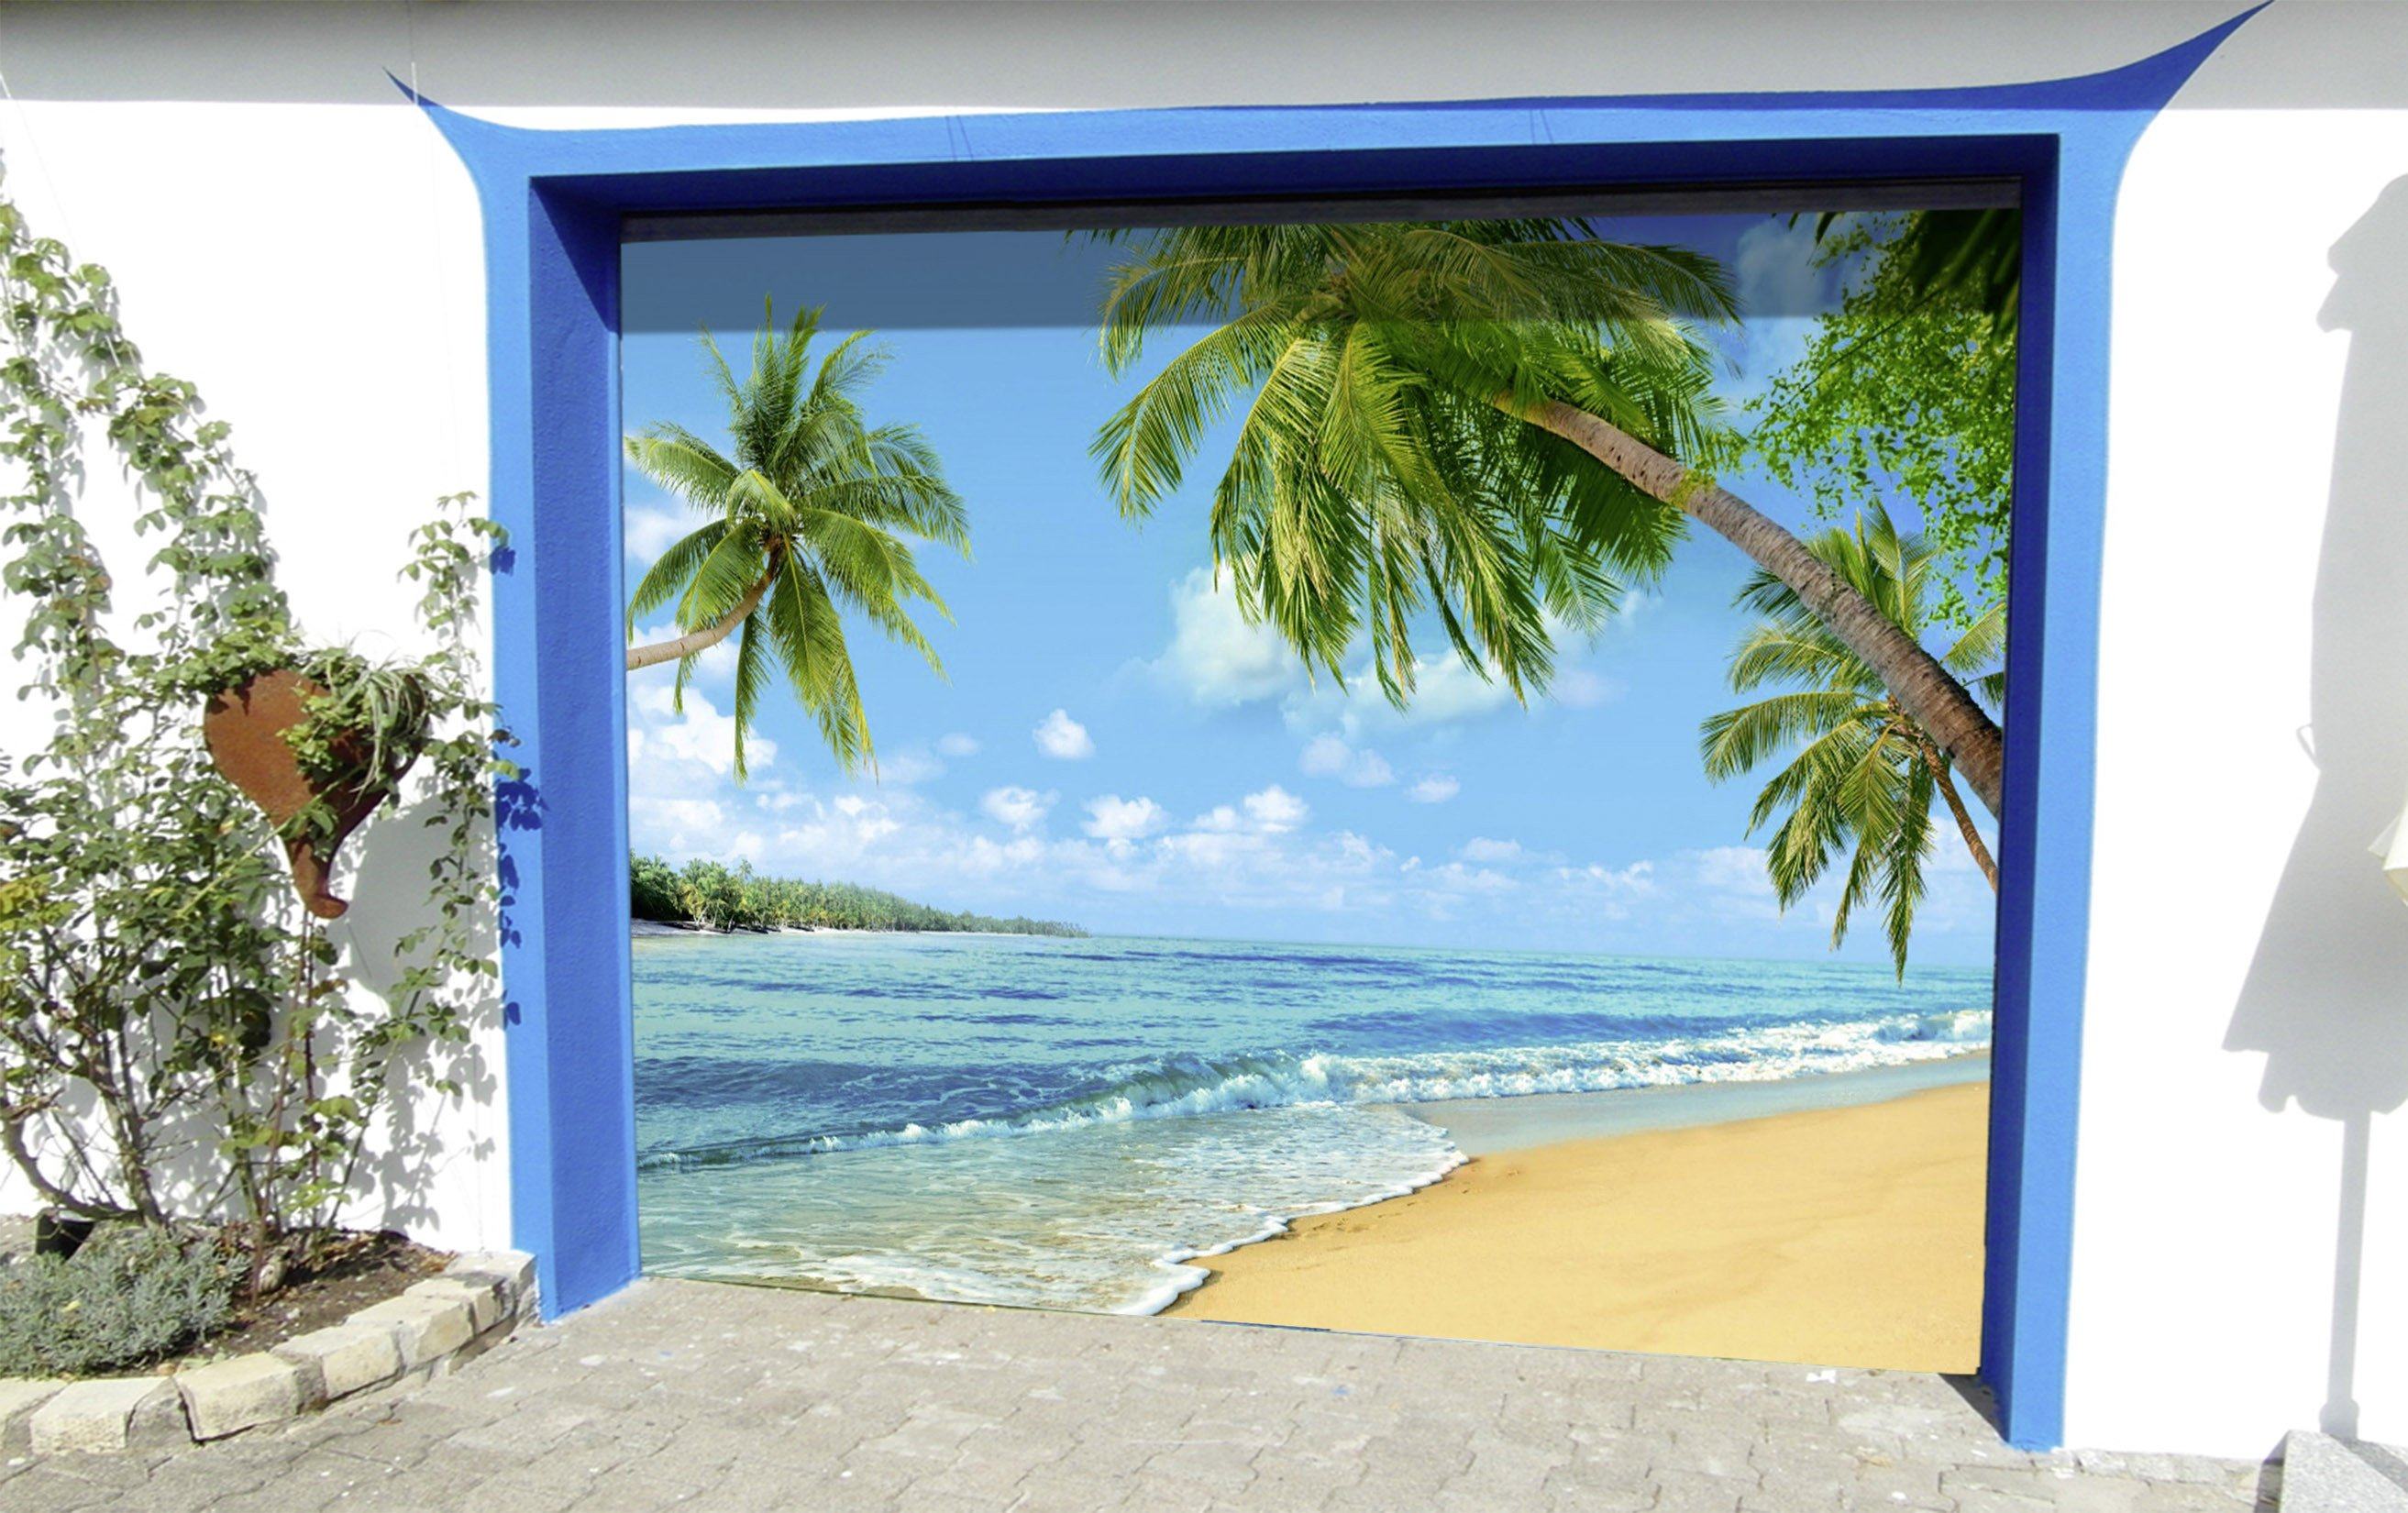 3D Beautiful Beach 402 Garage Door Mural Wallpaper AJ Wallpaper 